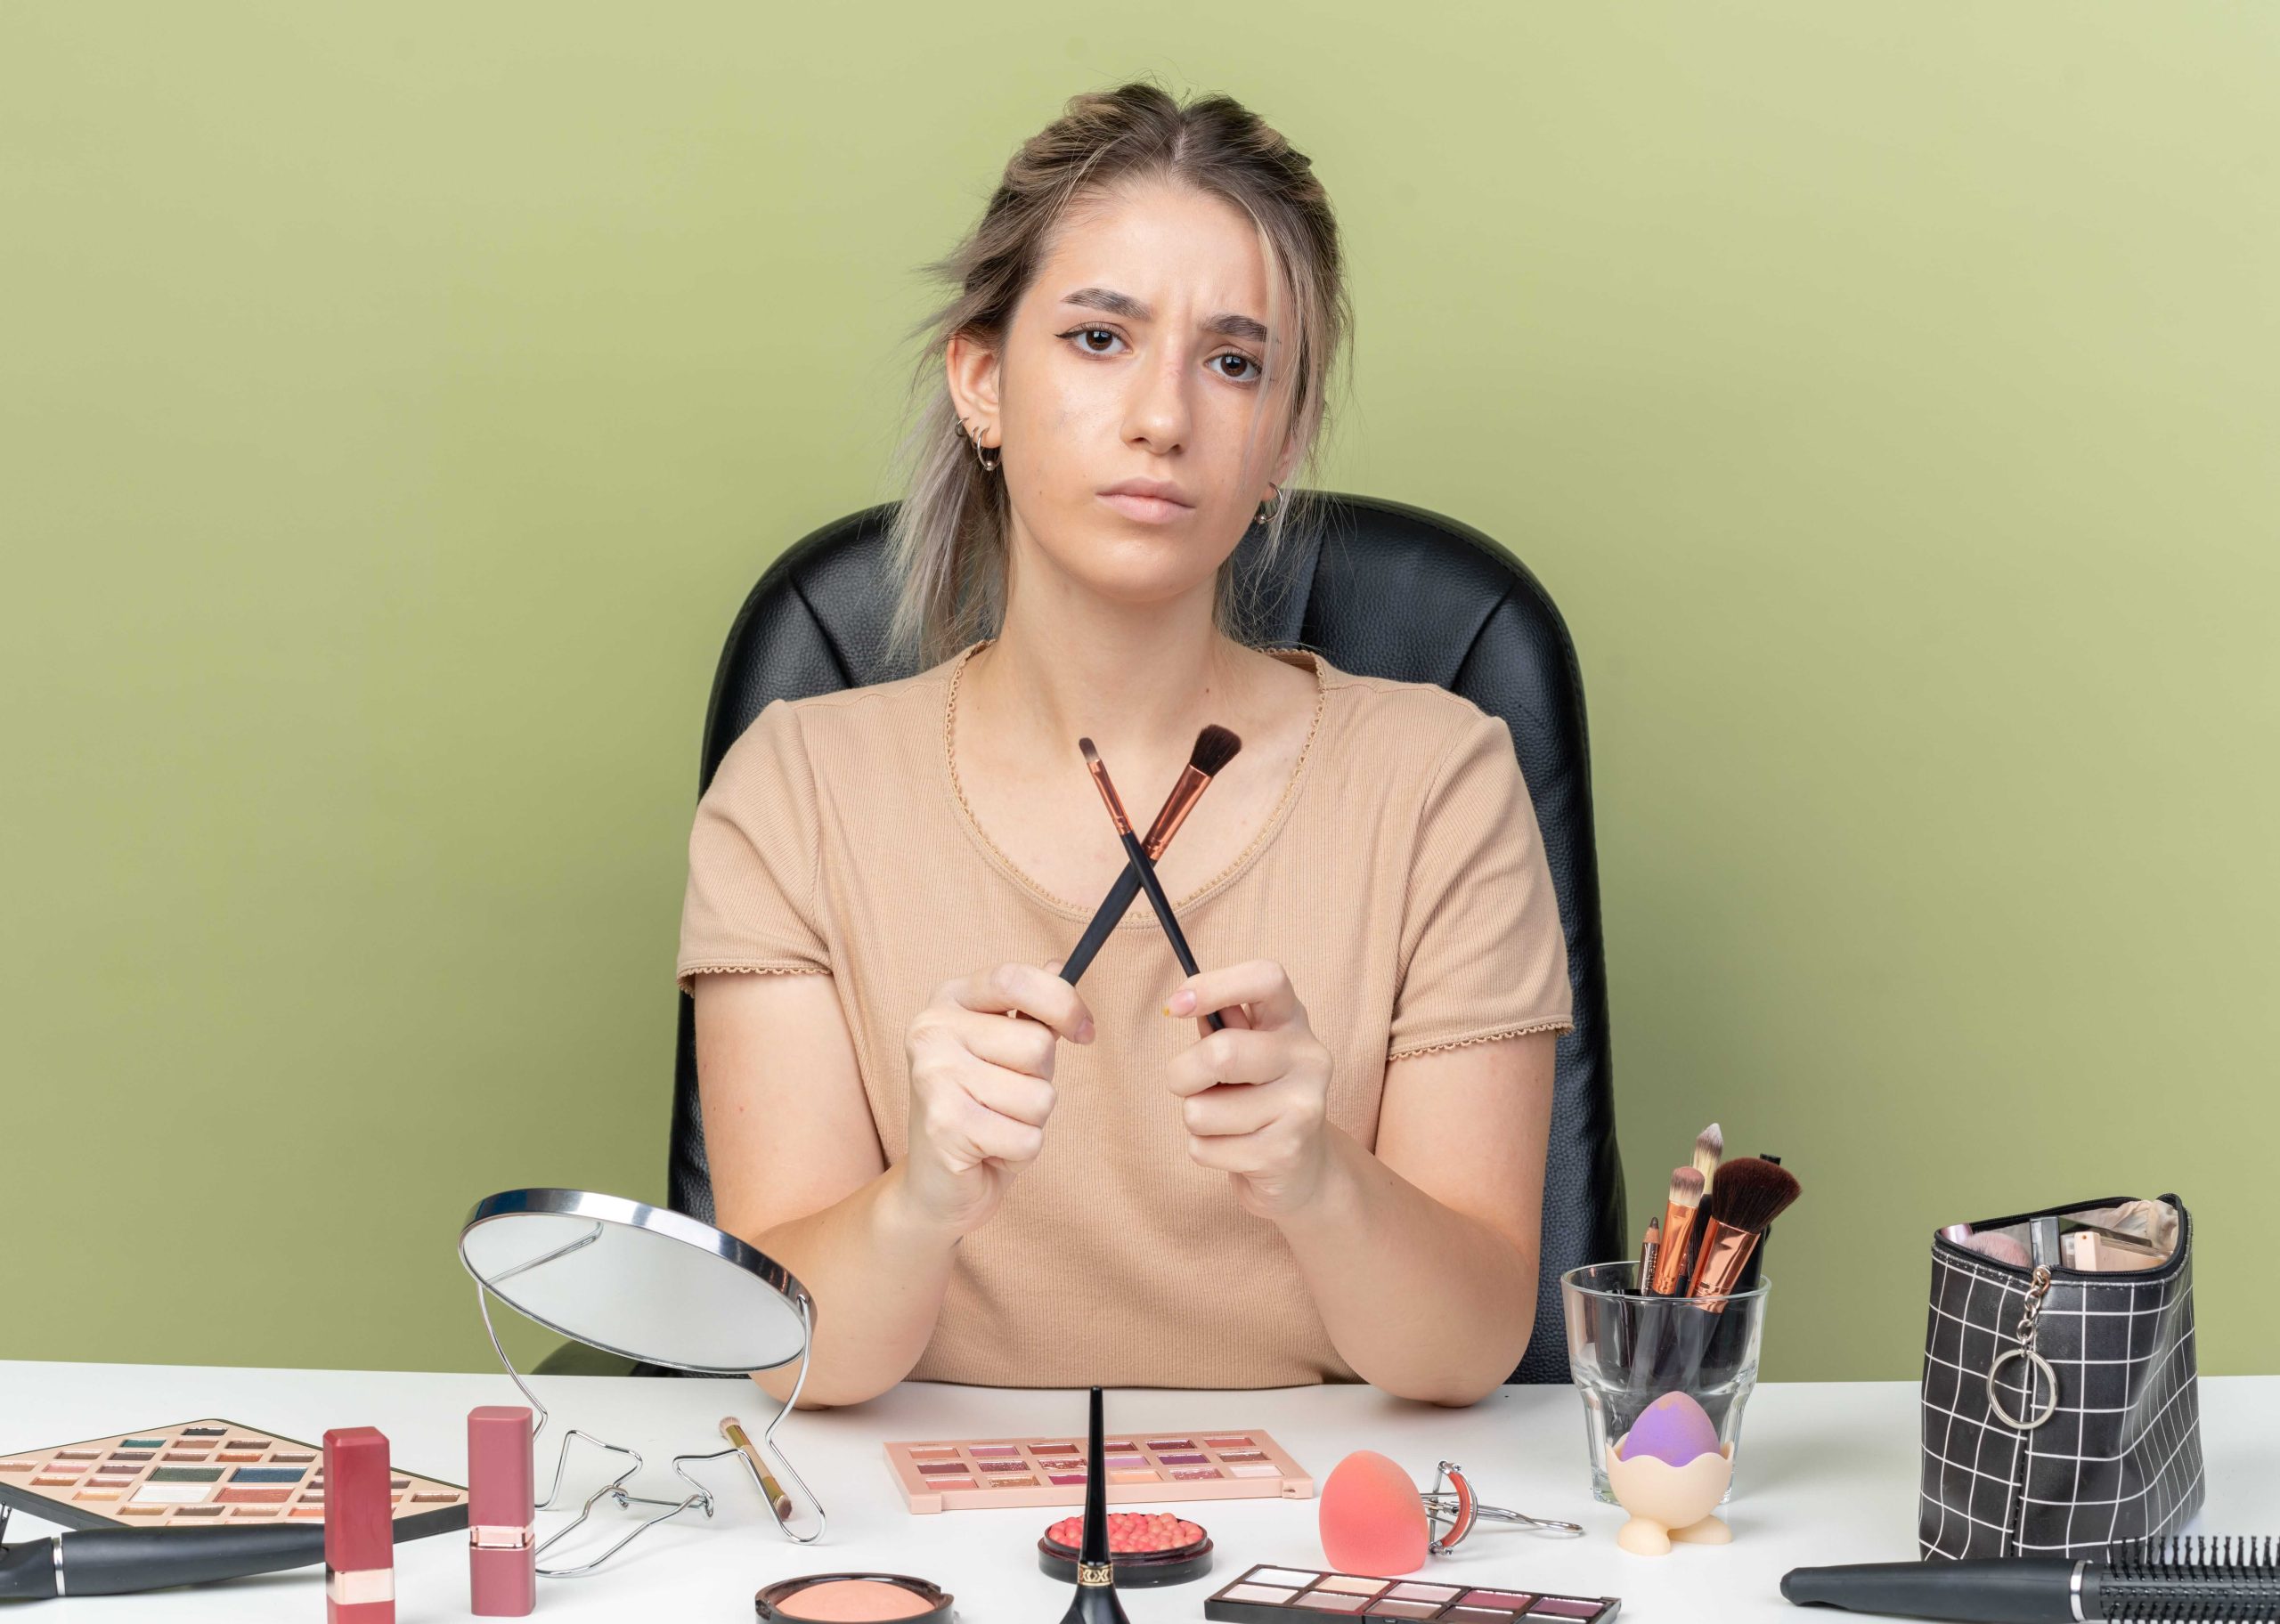 career option in airbrush makeup